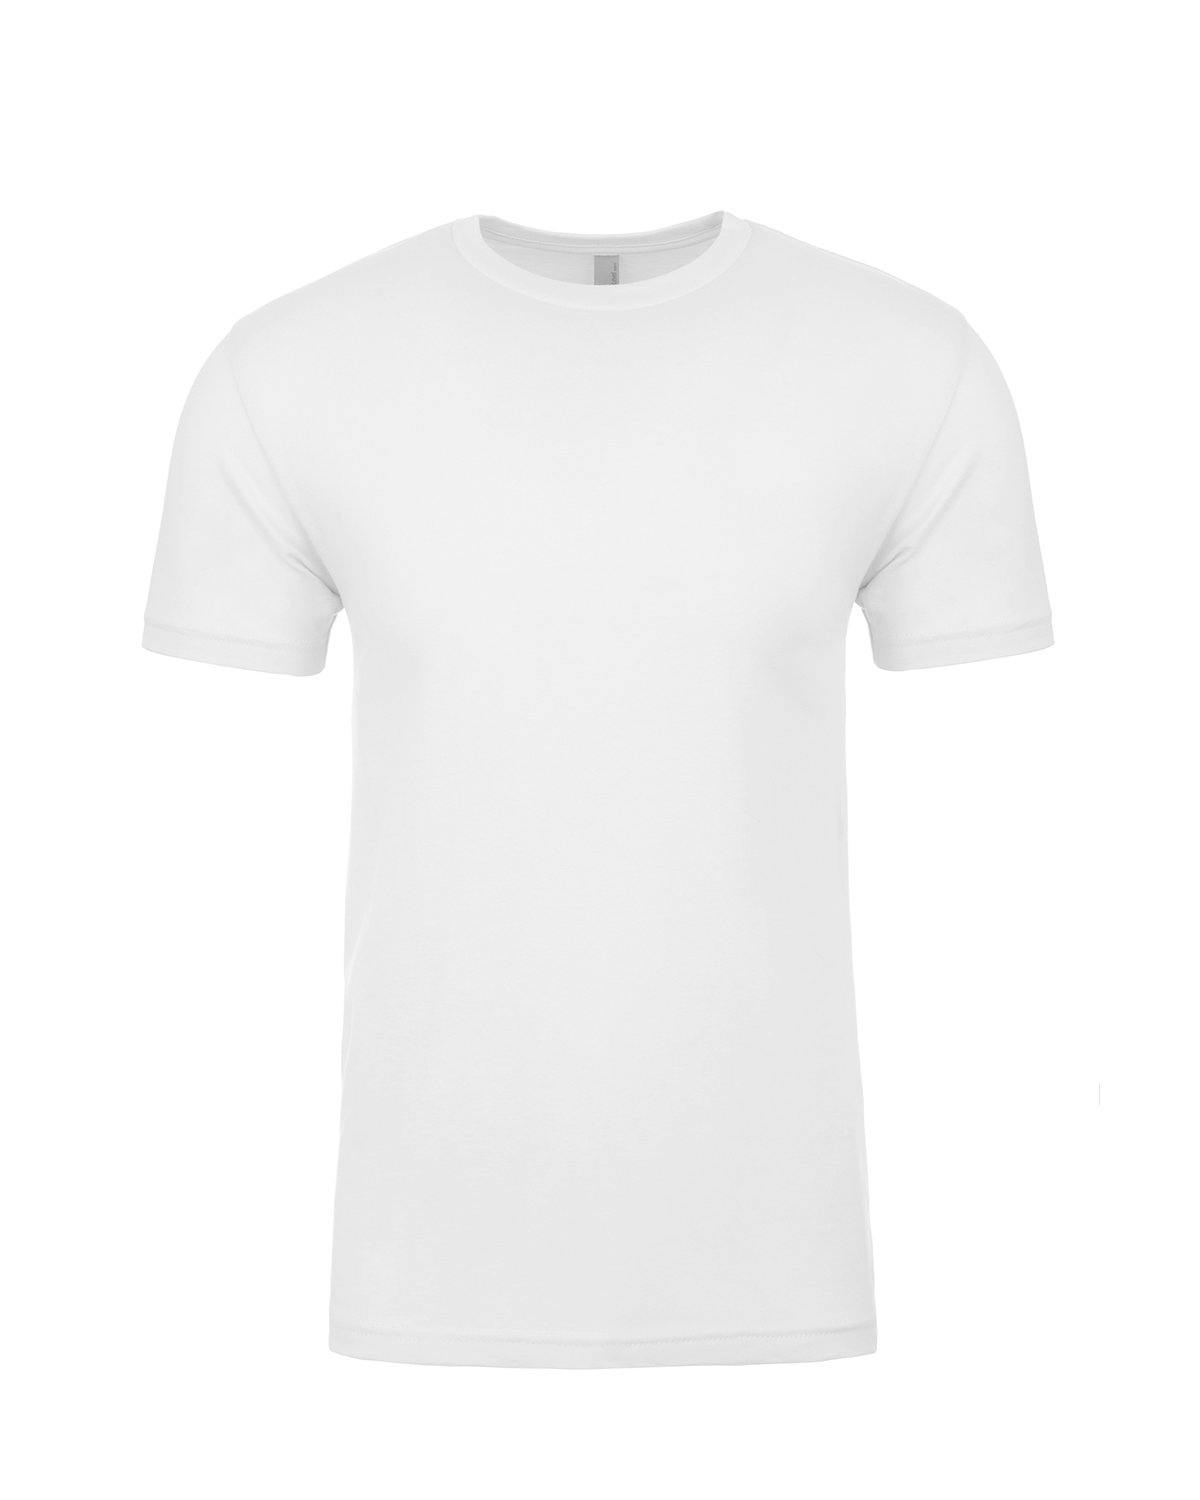 Image for Unisex Cotton T-Shirt